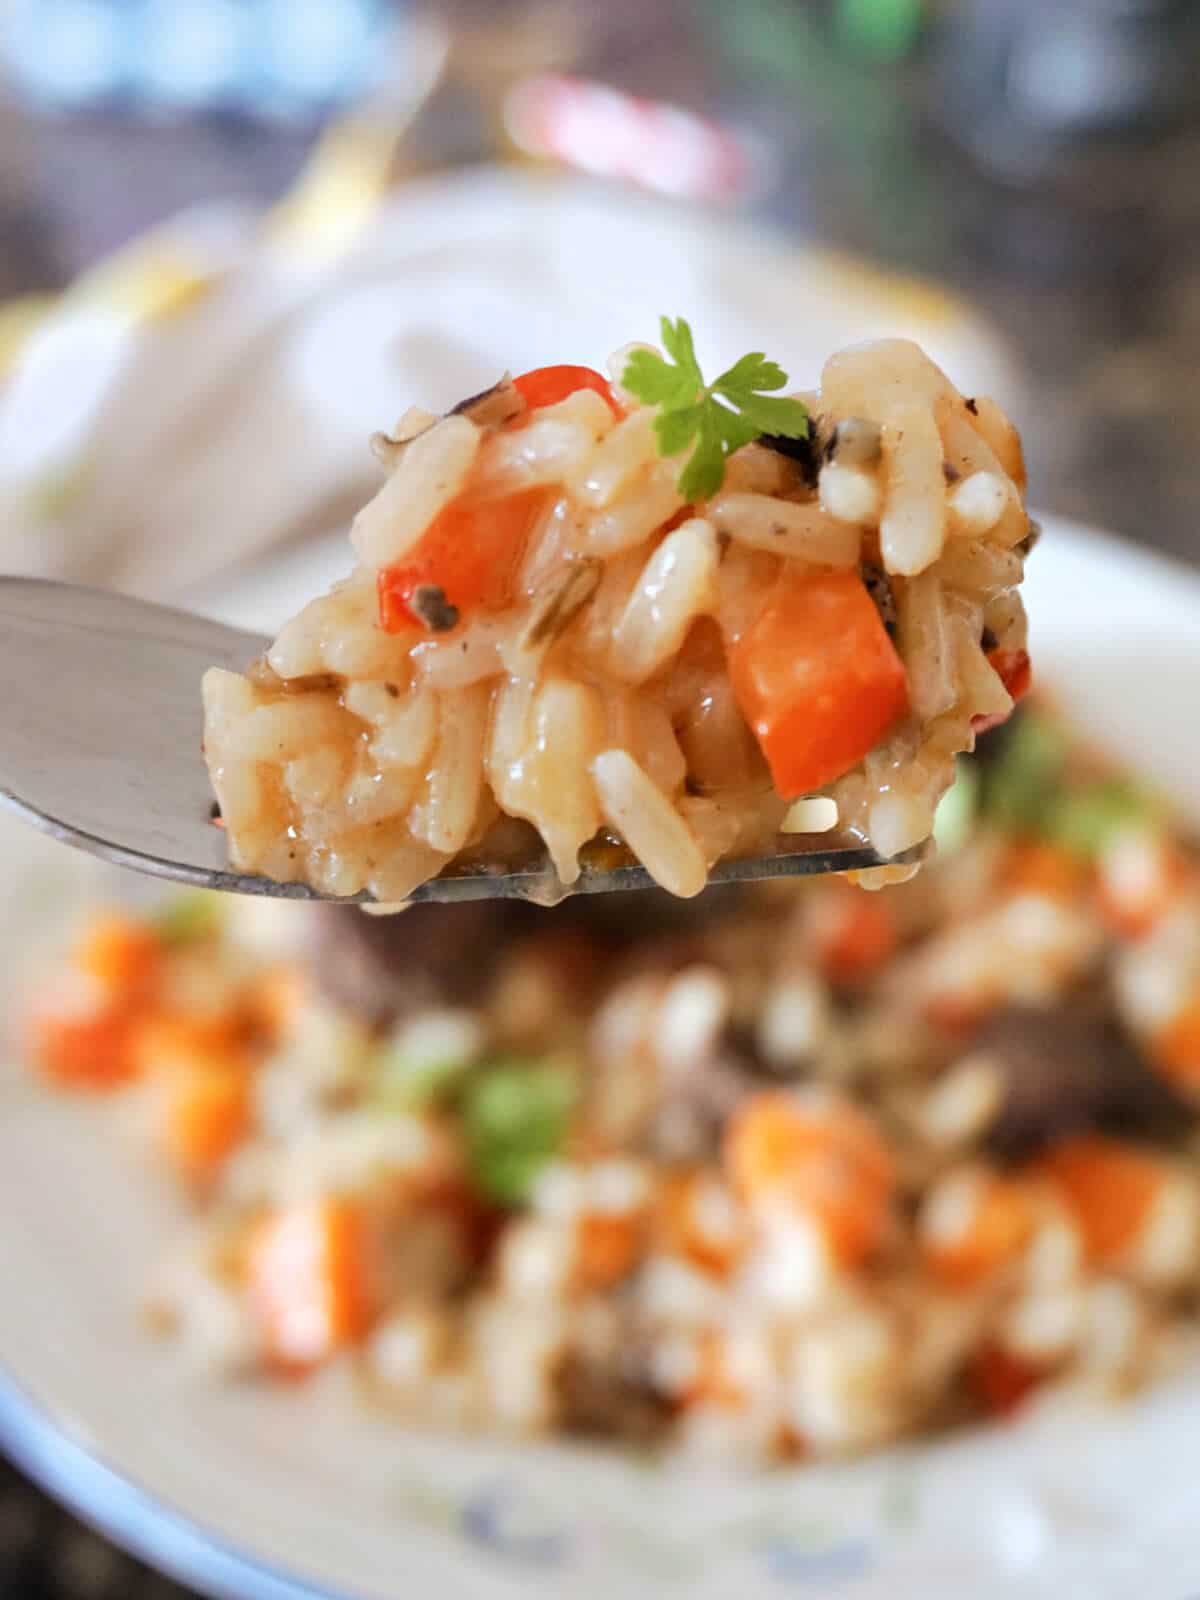 Close-up shot of a forkful of rice pilaf